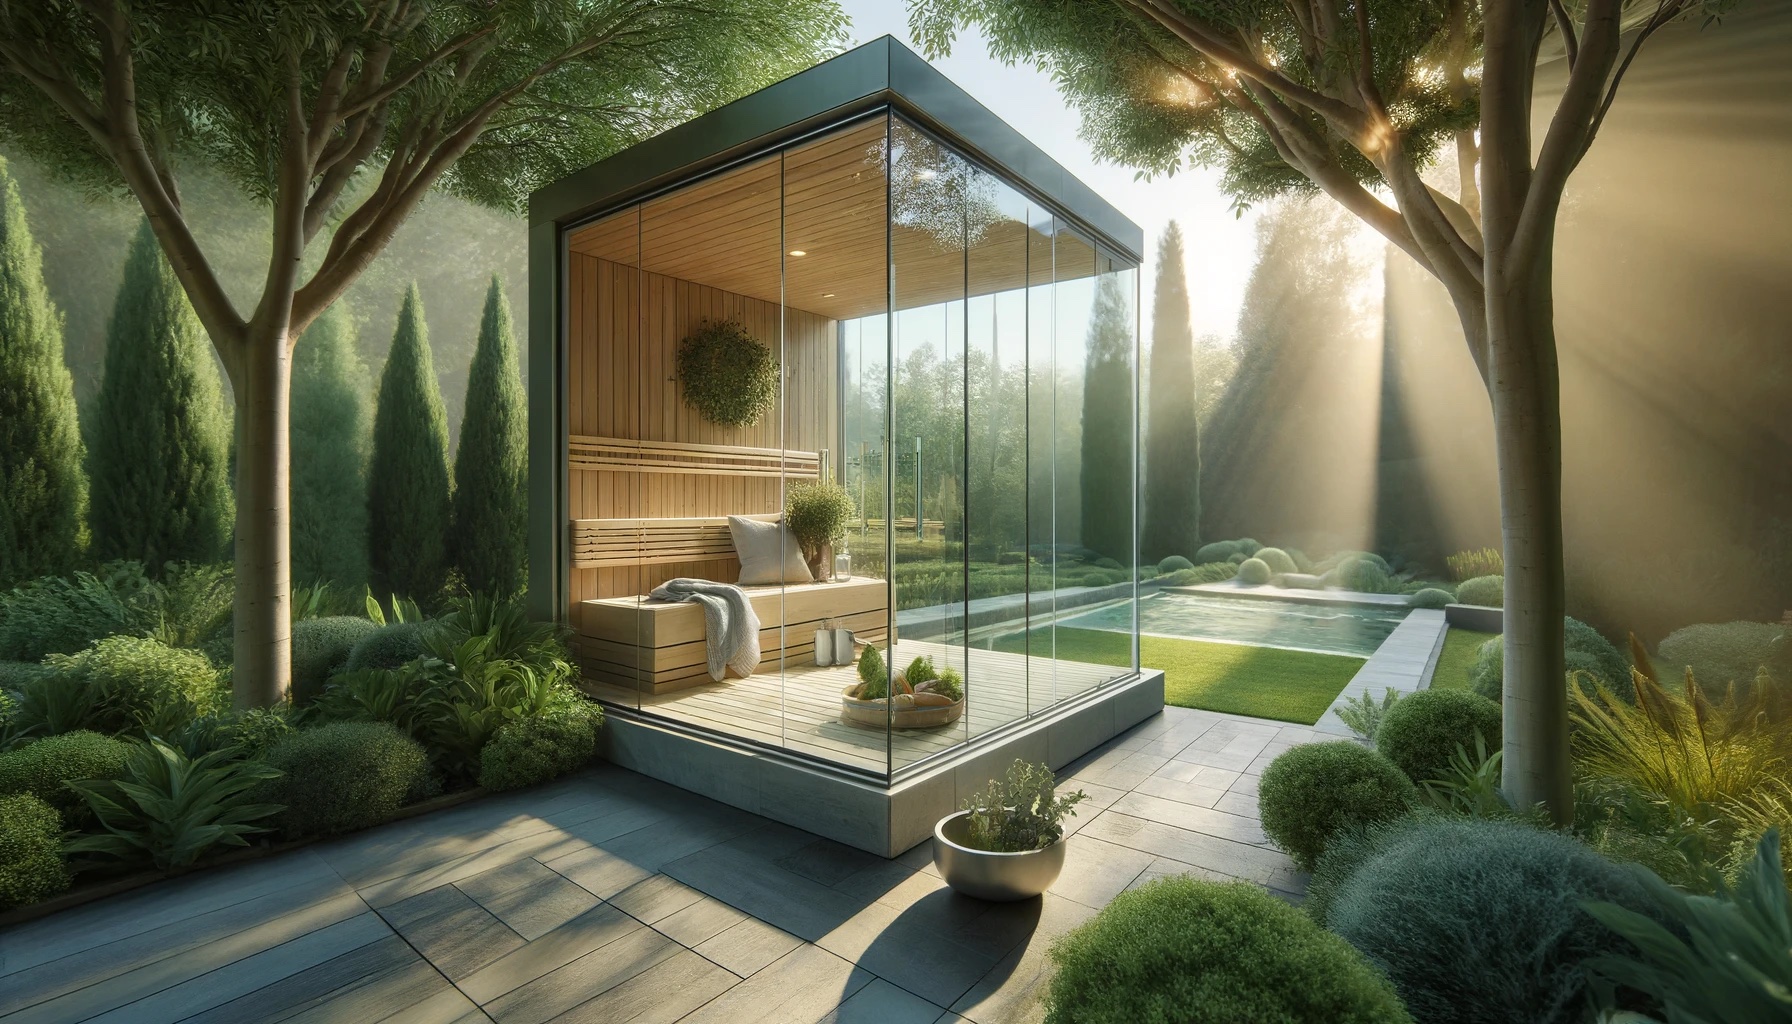 Backyard saunas make a stylish comeback as homeowners embrace wellness trends